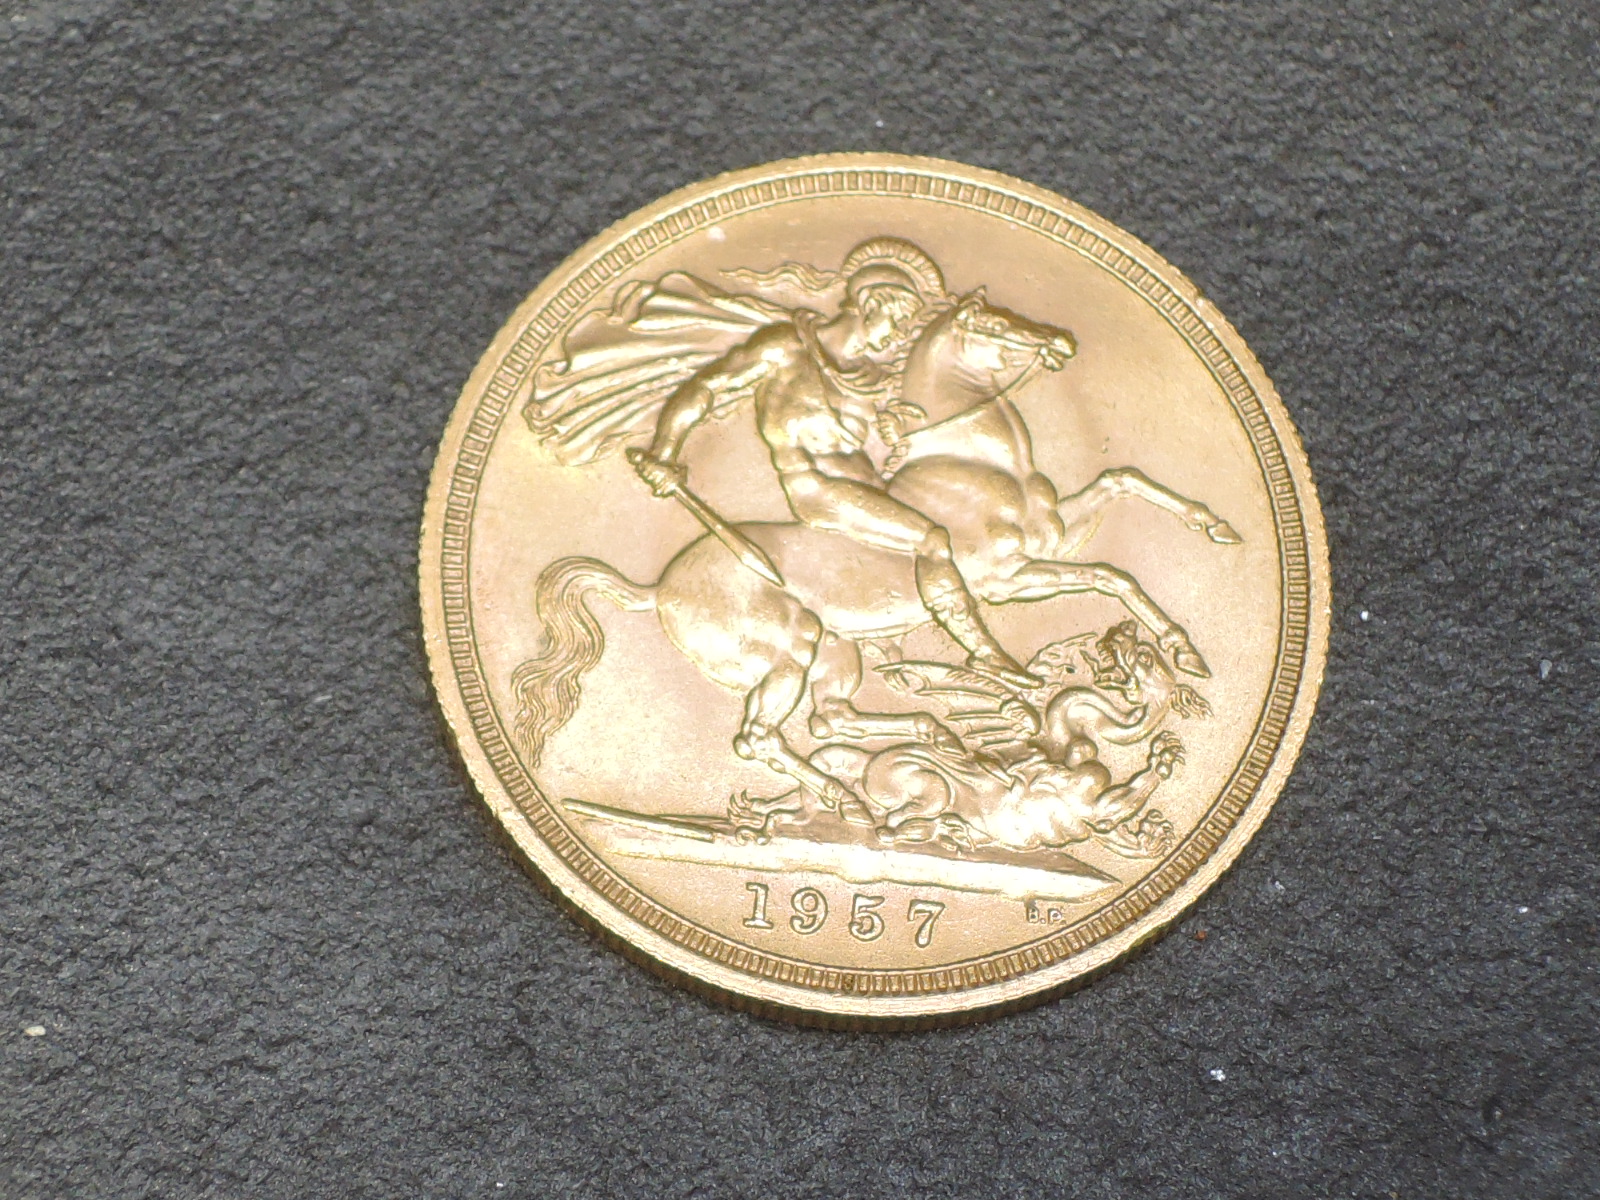 A United Kingdom Royal Mint 1957 Queen Elizabeth II Gold Sovereign